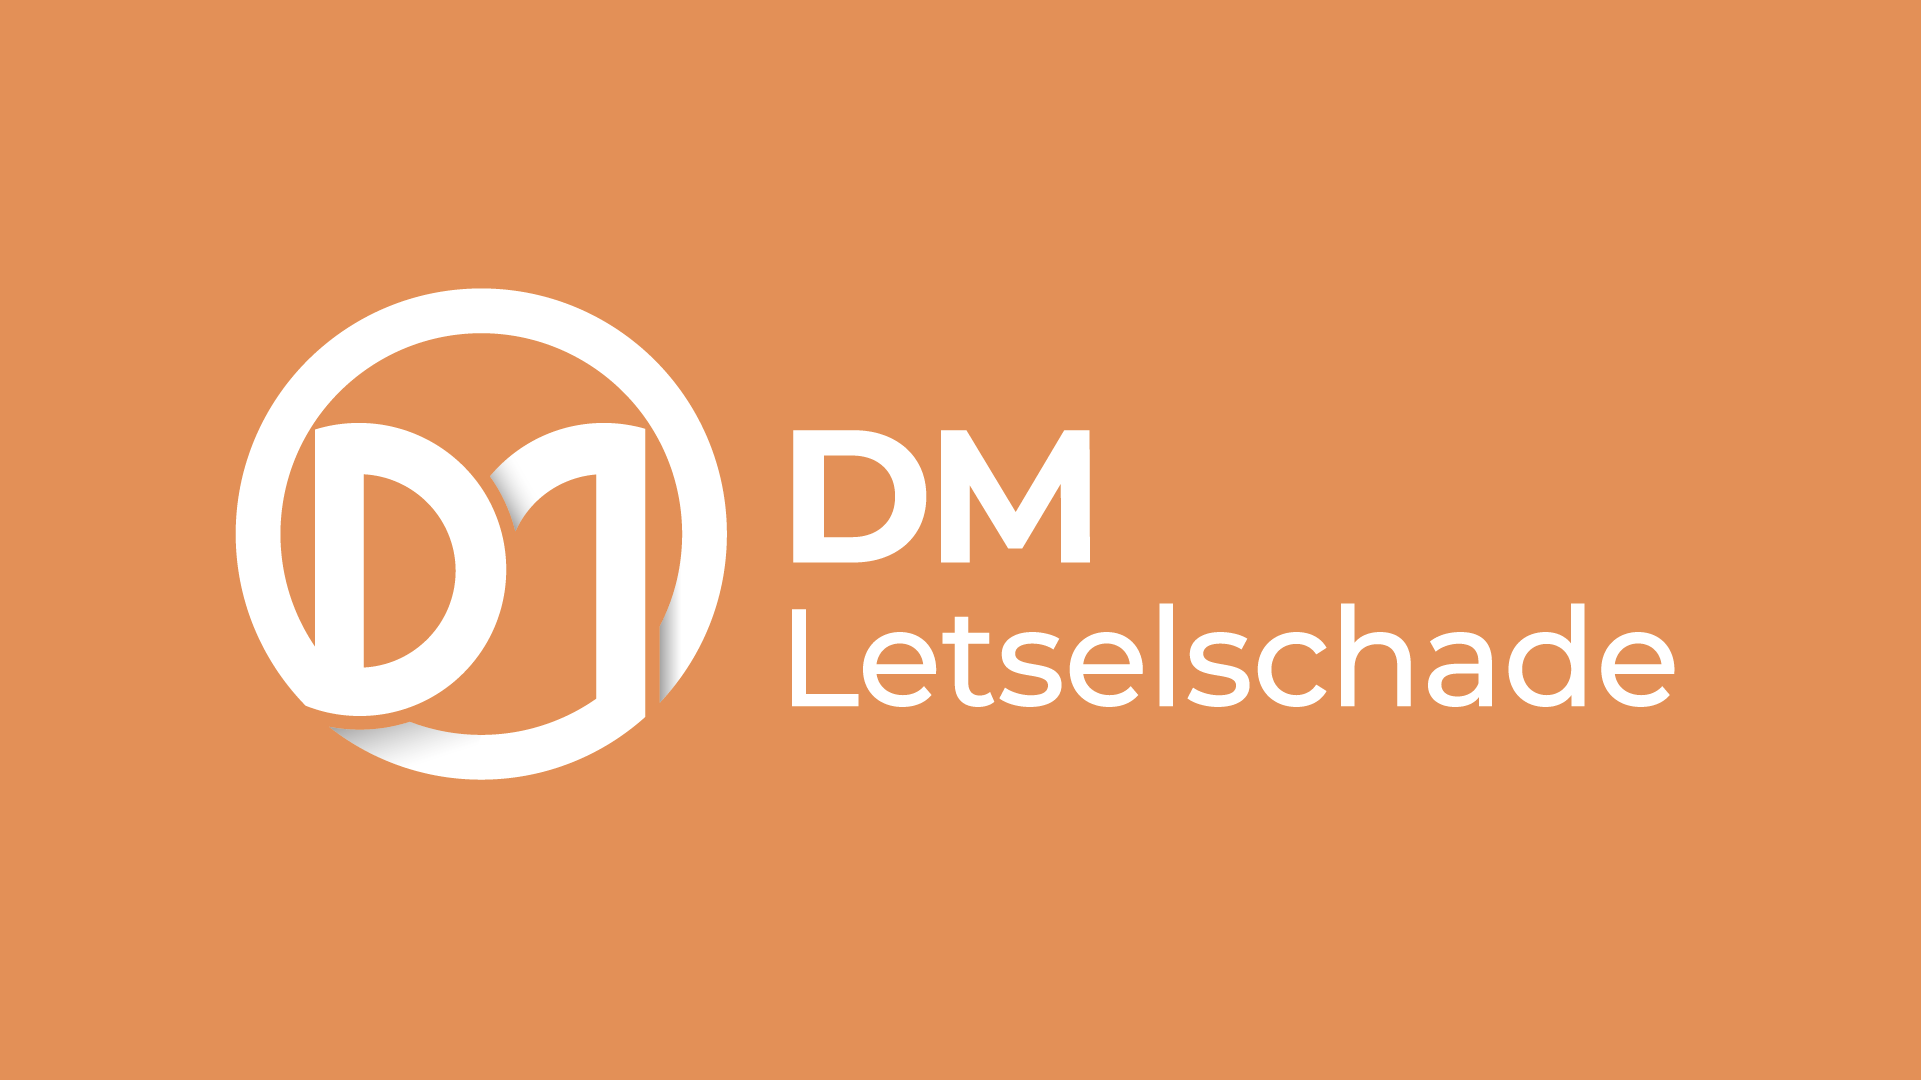 DM Letselschade logo 1